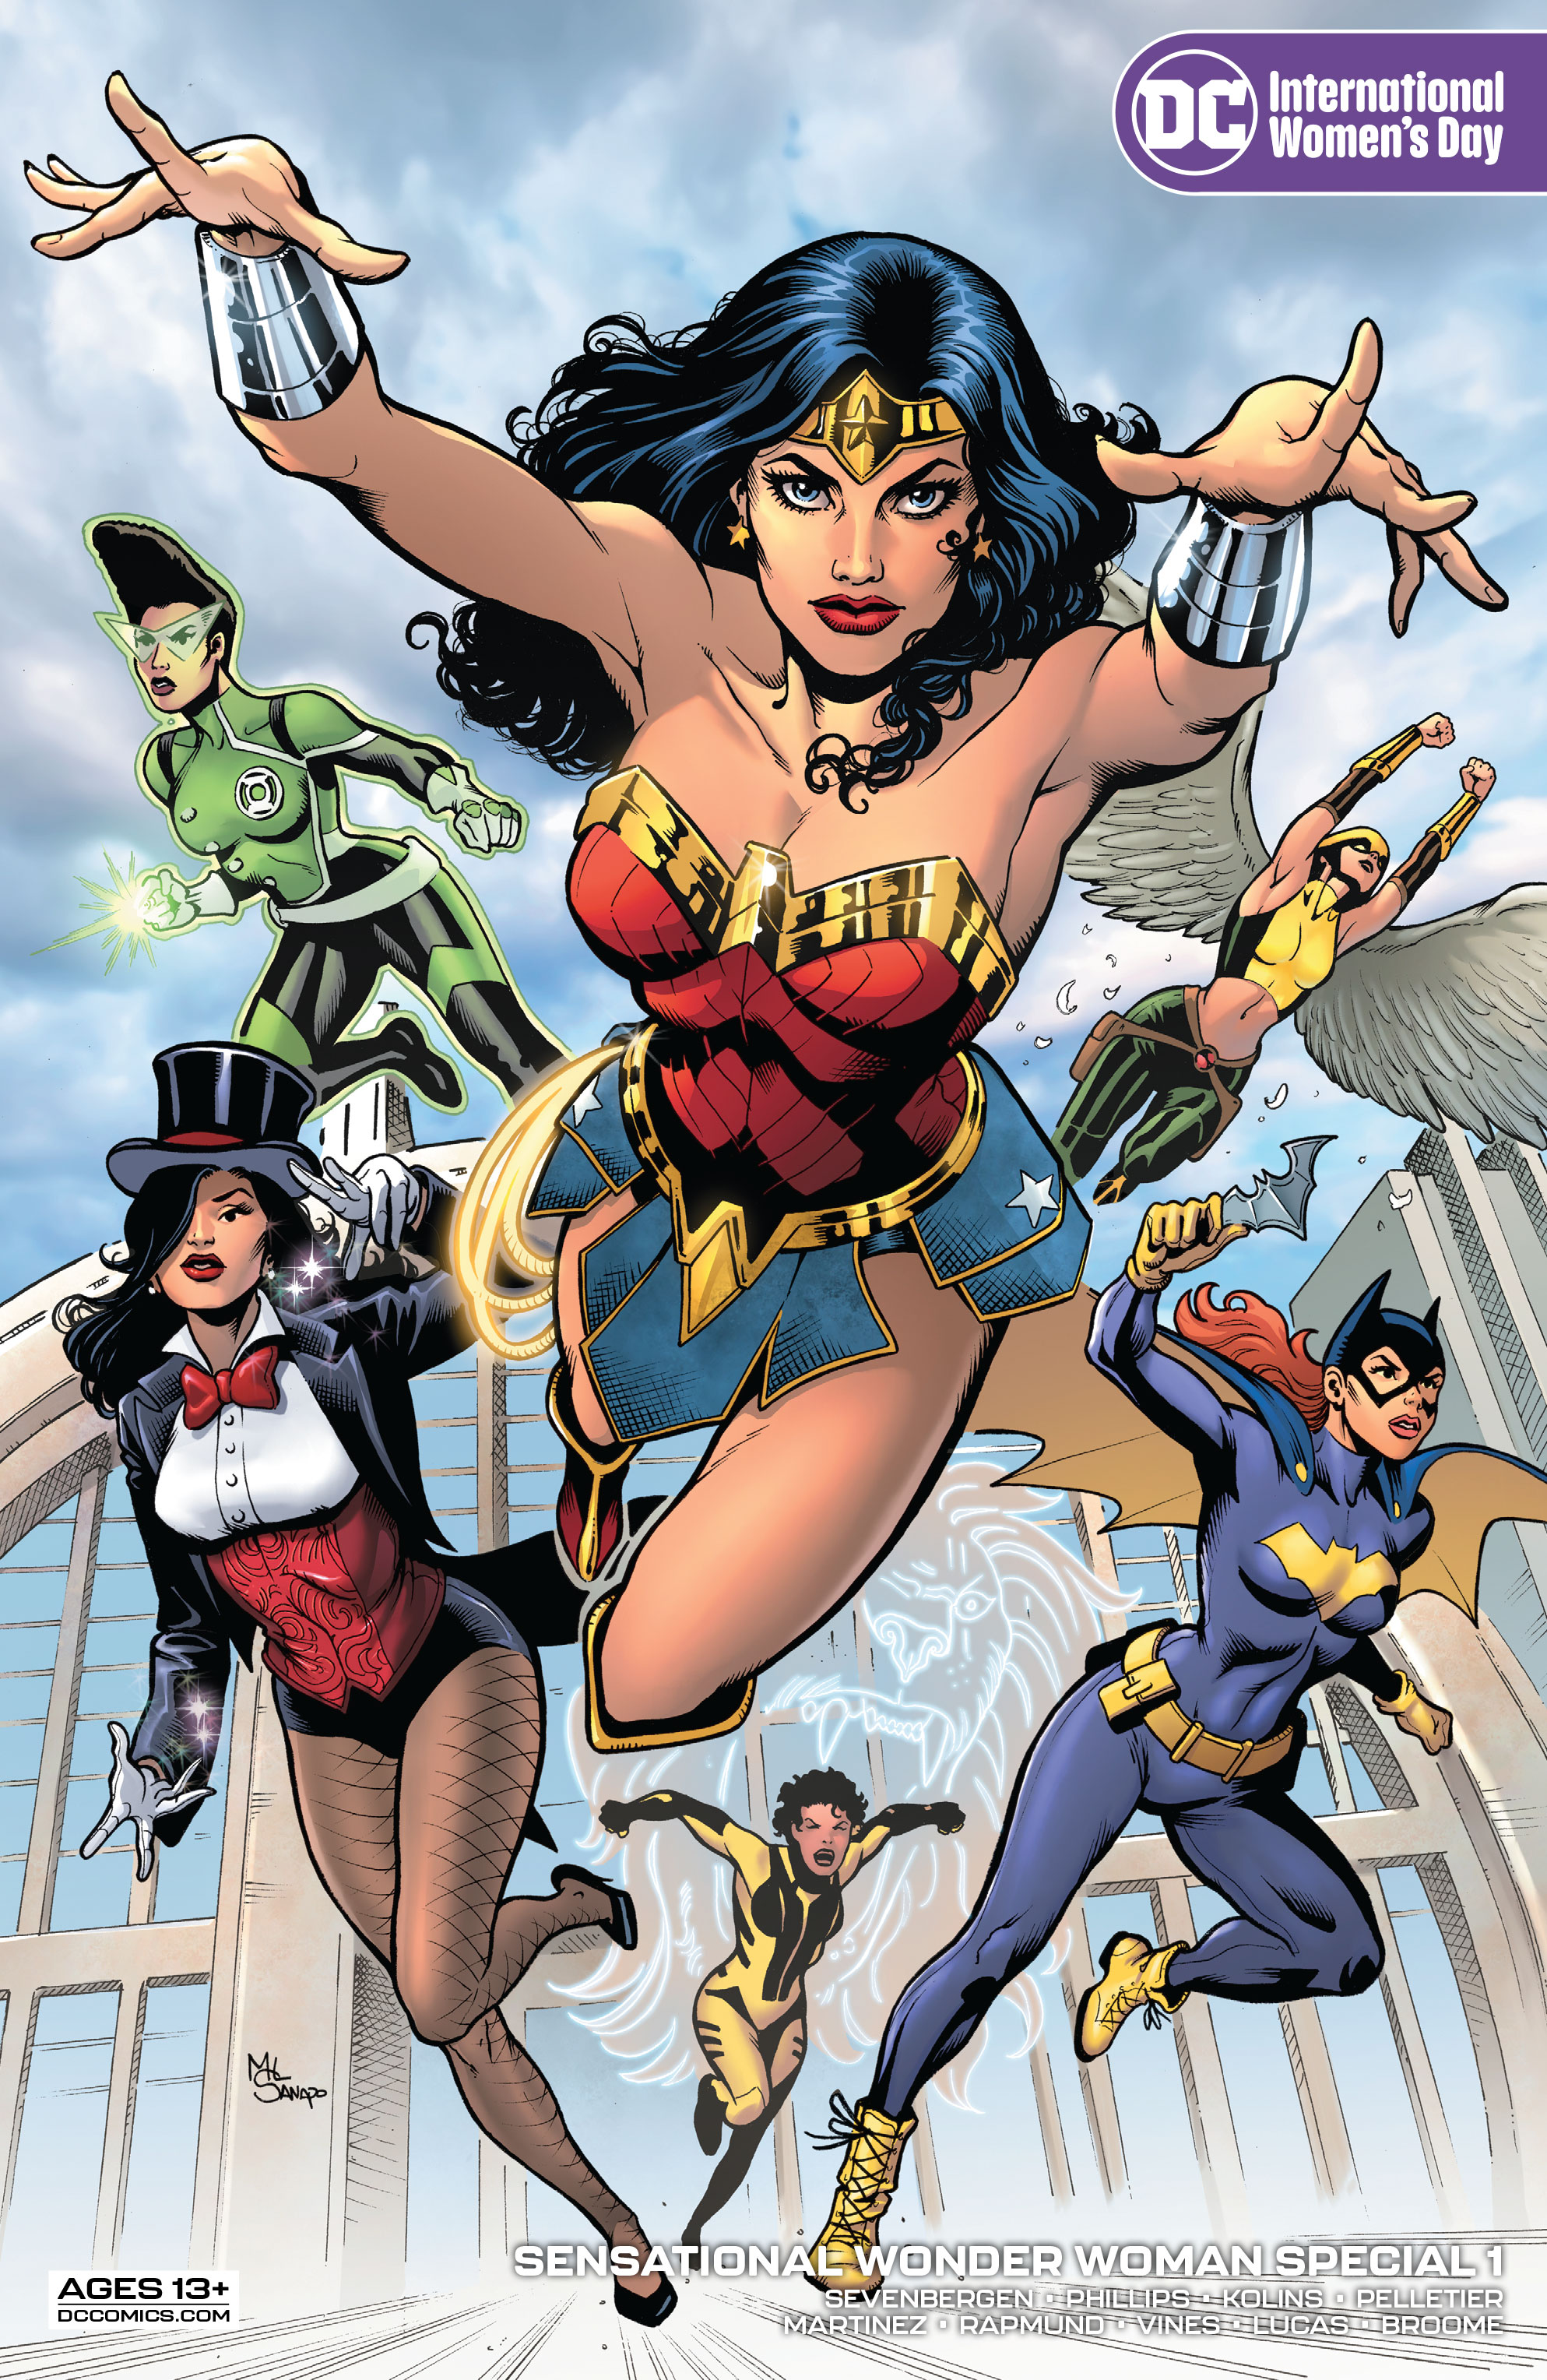 Sensational Wonder Woman Special 1 variant cover 2